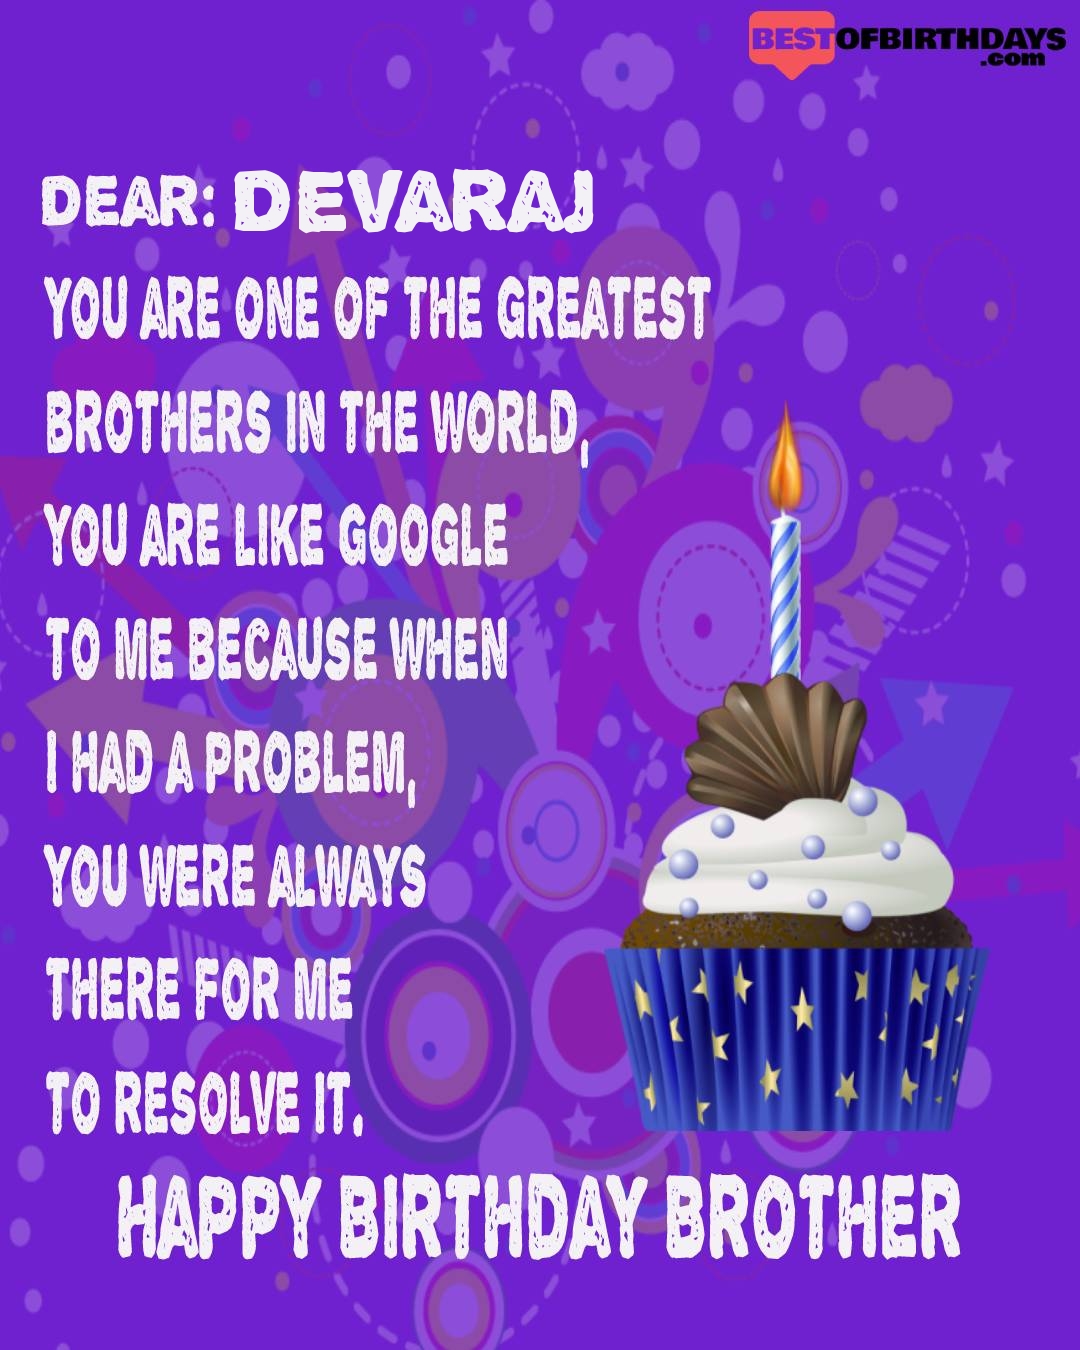 Happy birthday devaraj bhai brother bro